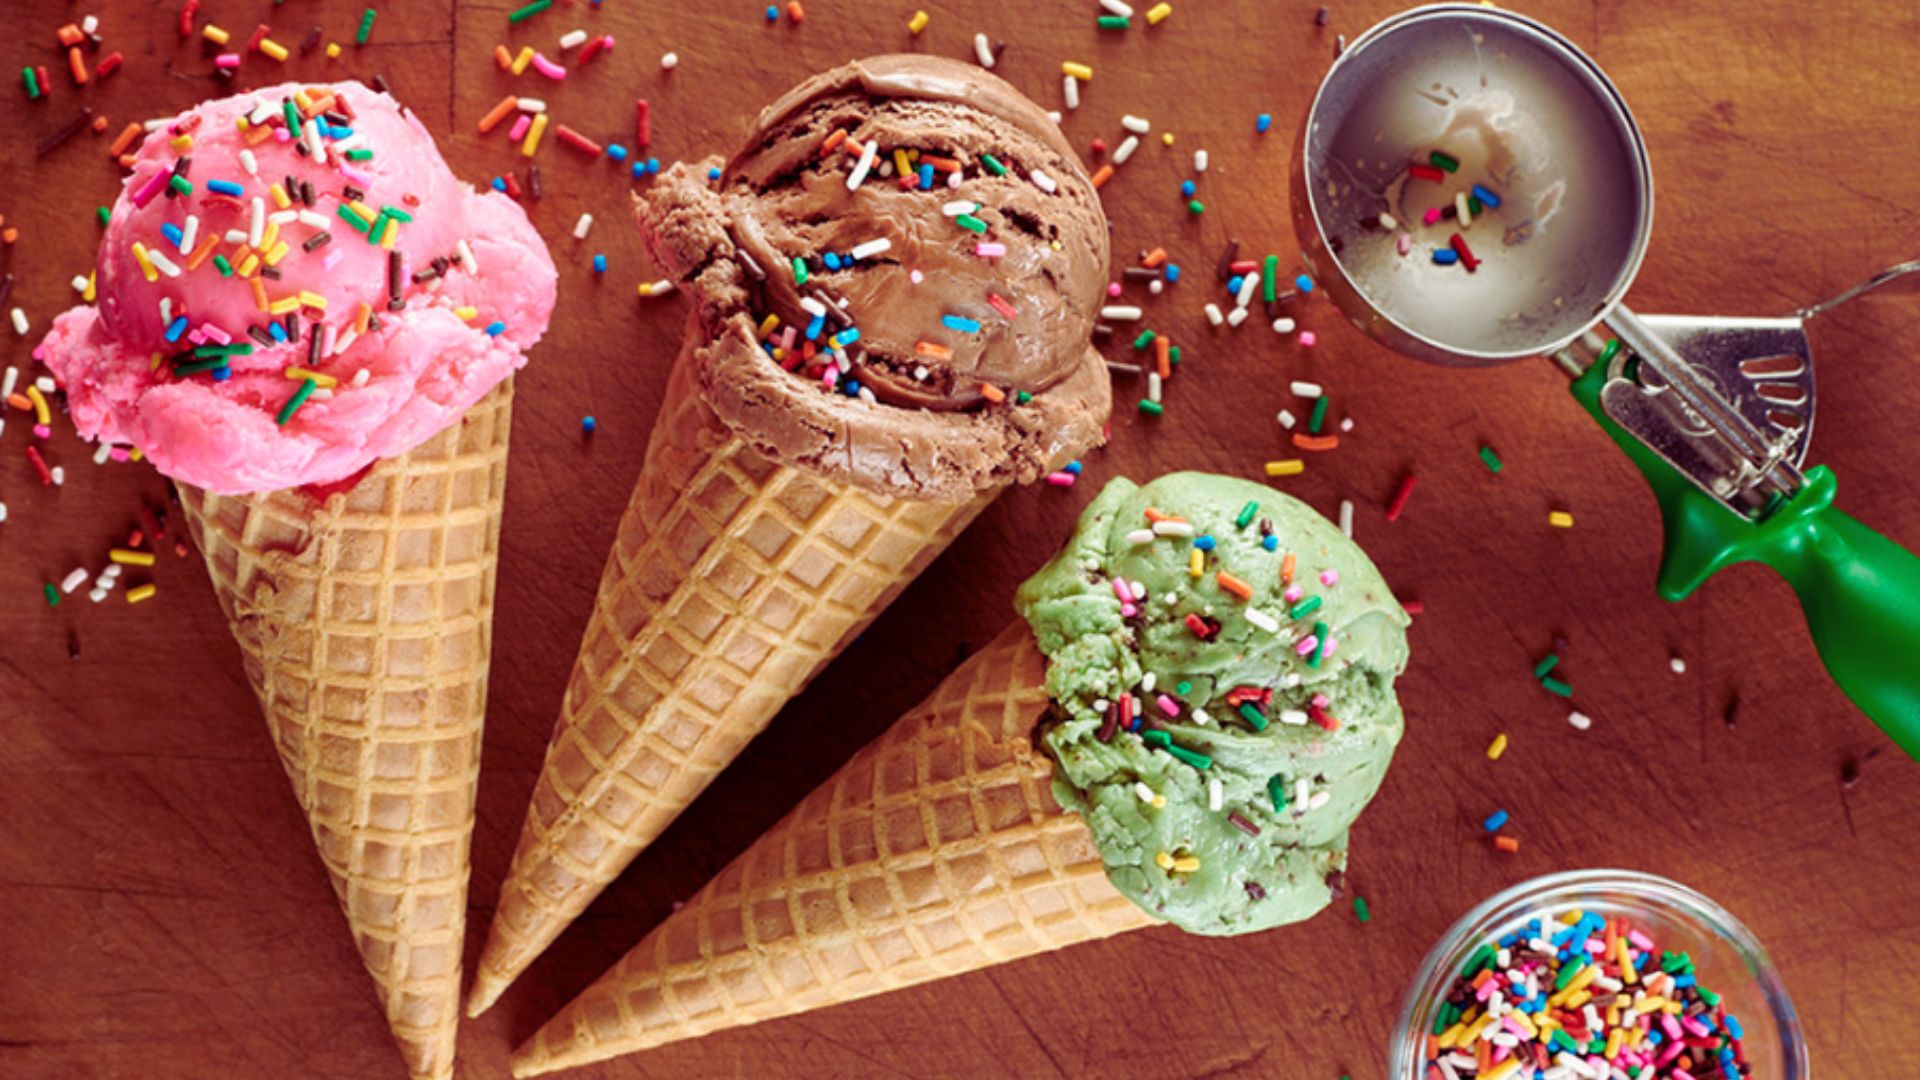 12 Best Sugar Free Ice Cream Brands in India